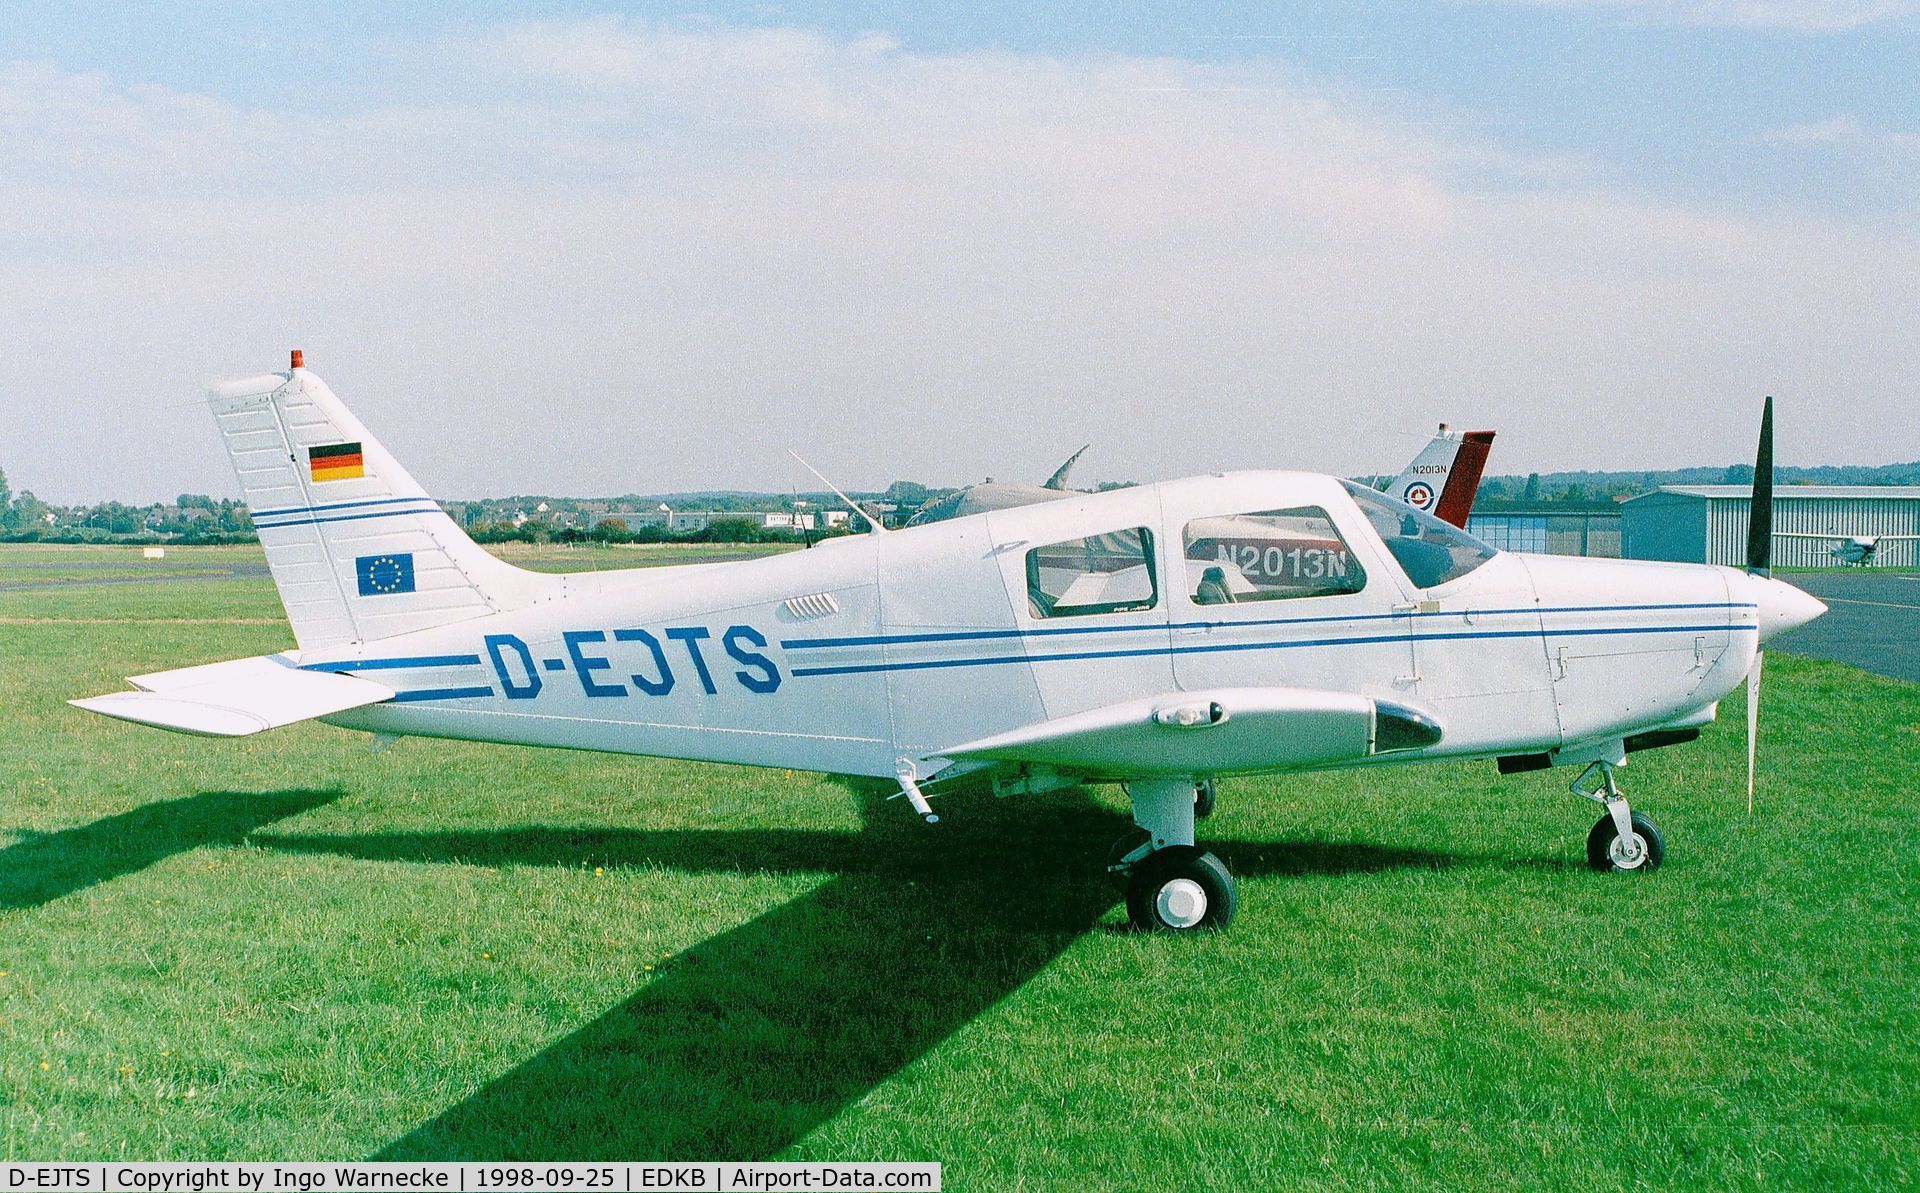 D-EJTS, 1989 Piper PA-28-161 C/N 2841314, Piper PA-28-161 Cadet at Bonn-Hangelar airfield